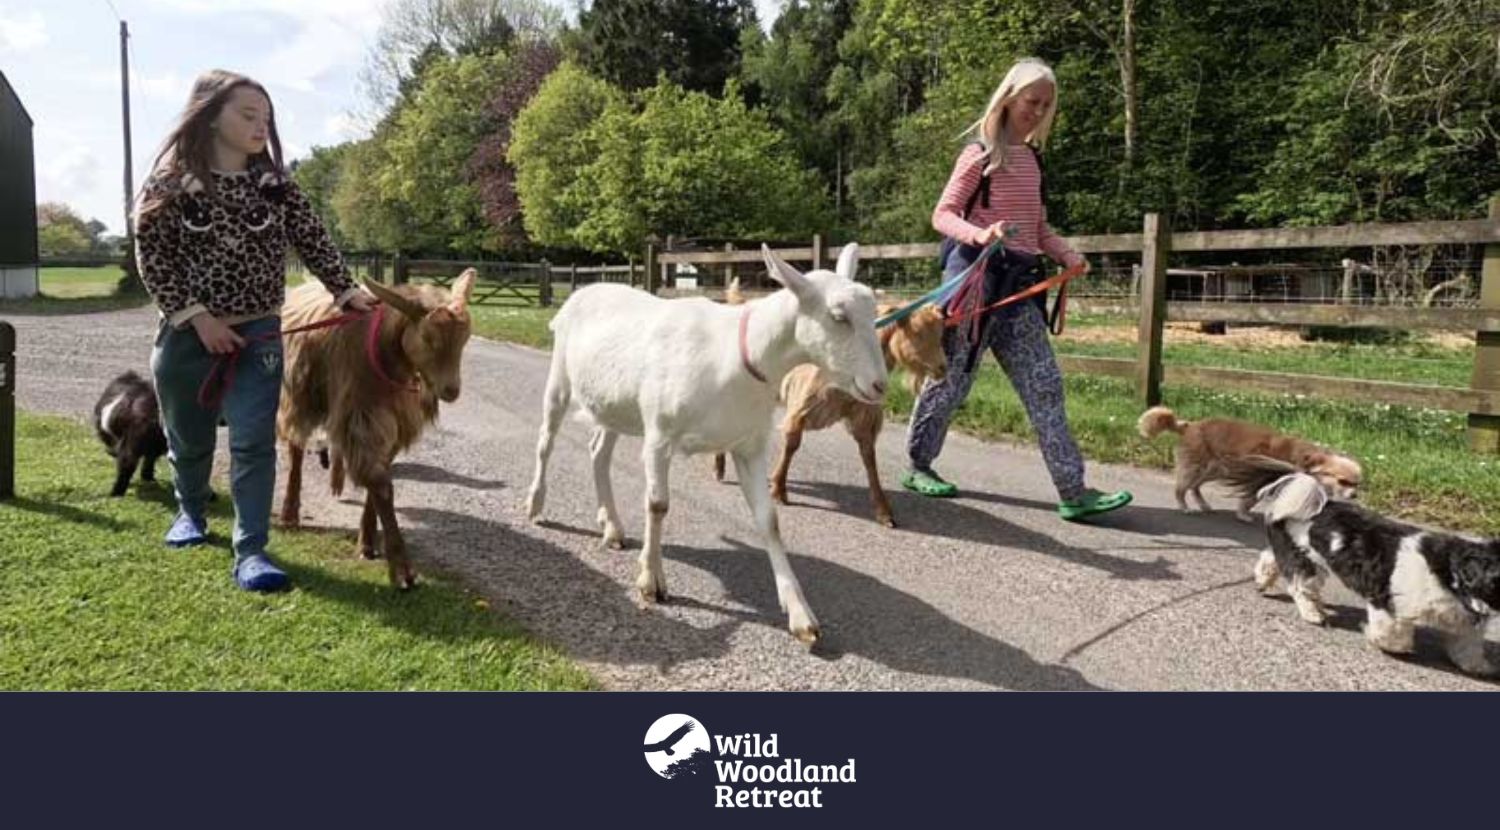 Goat Walk Experience - Wild Woodland Retreat